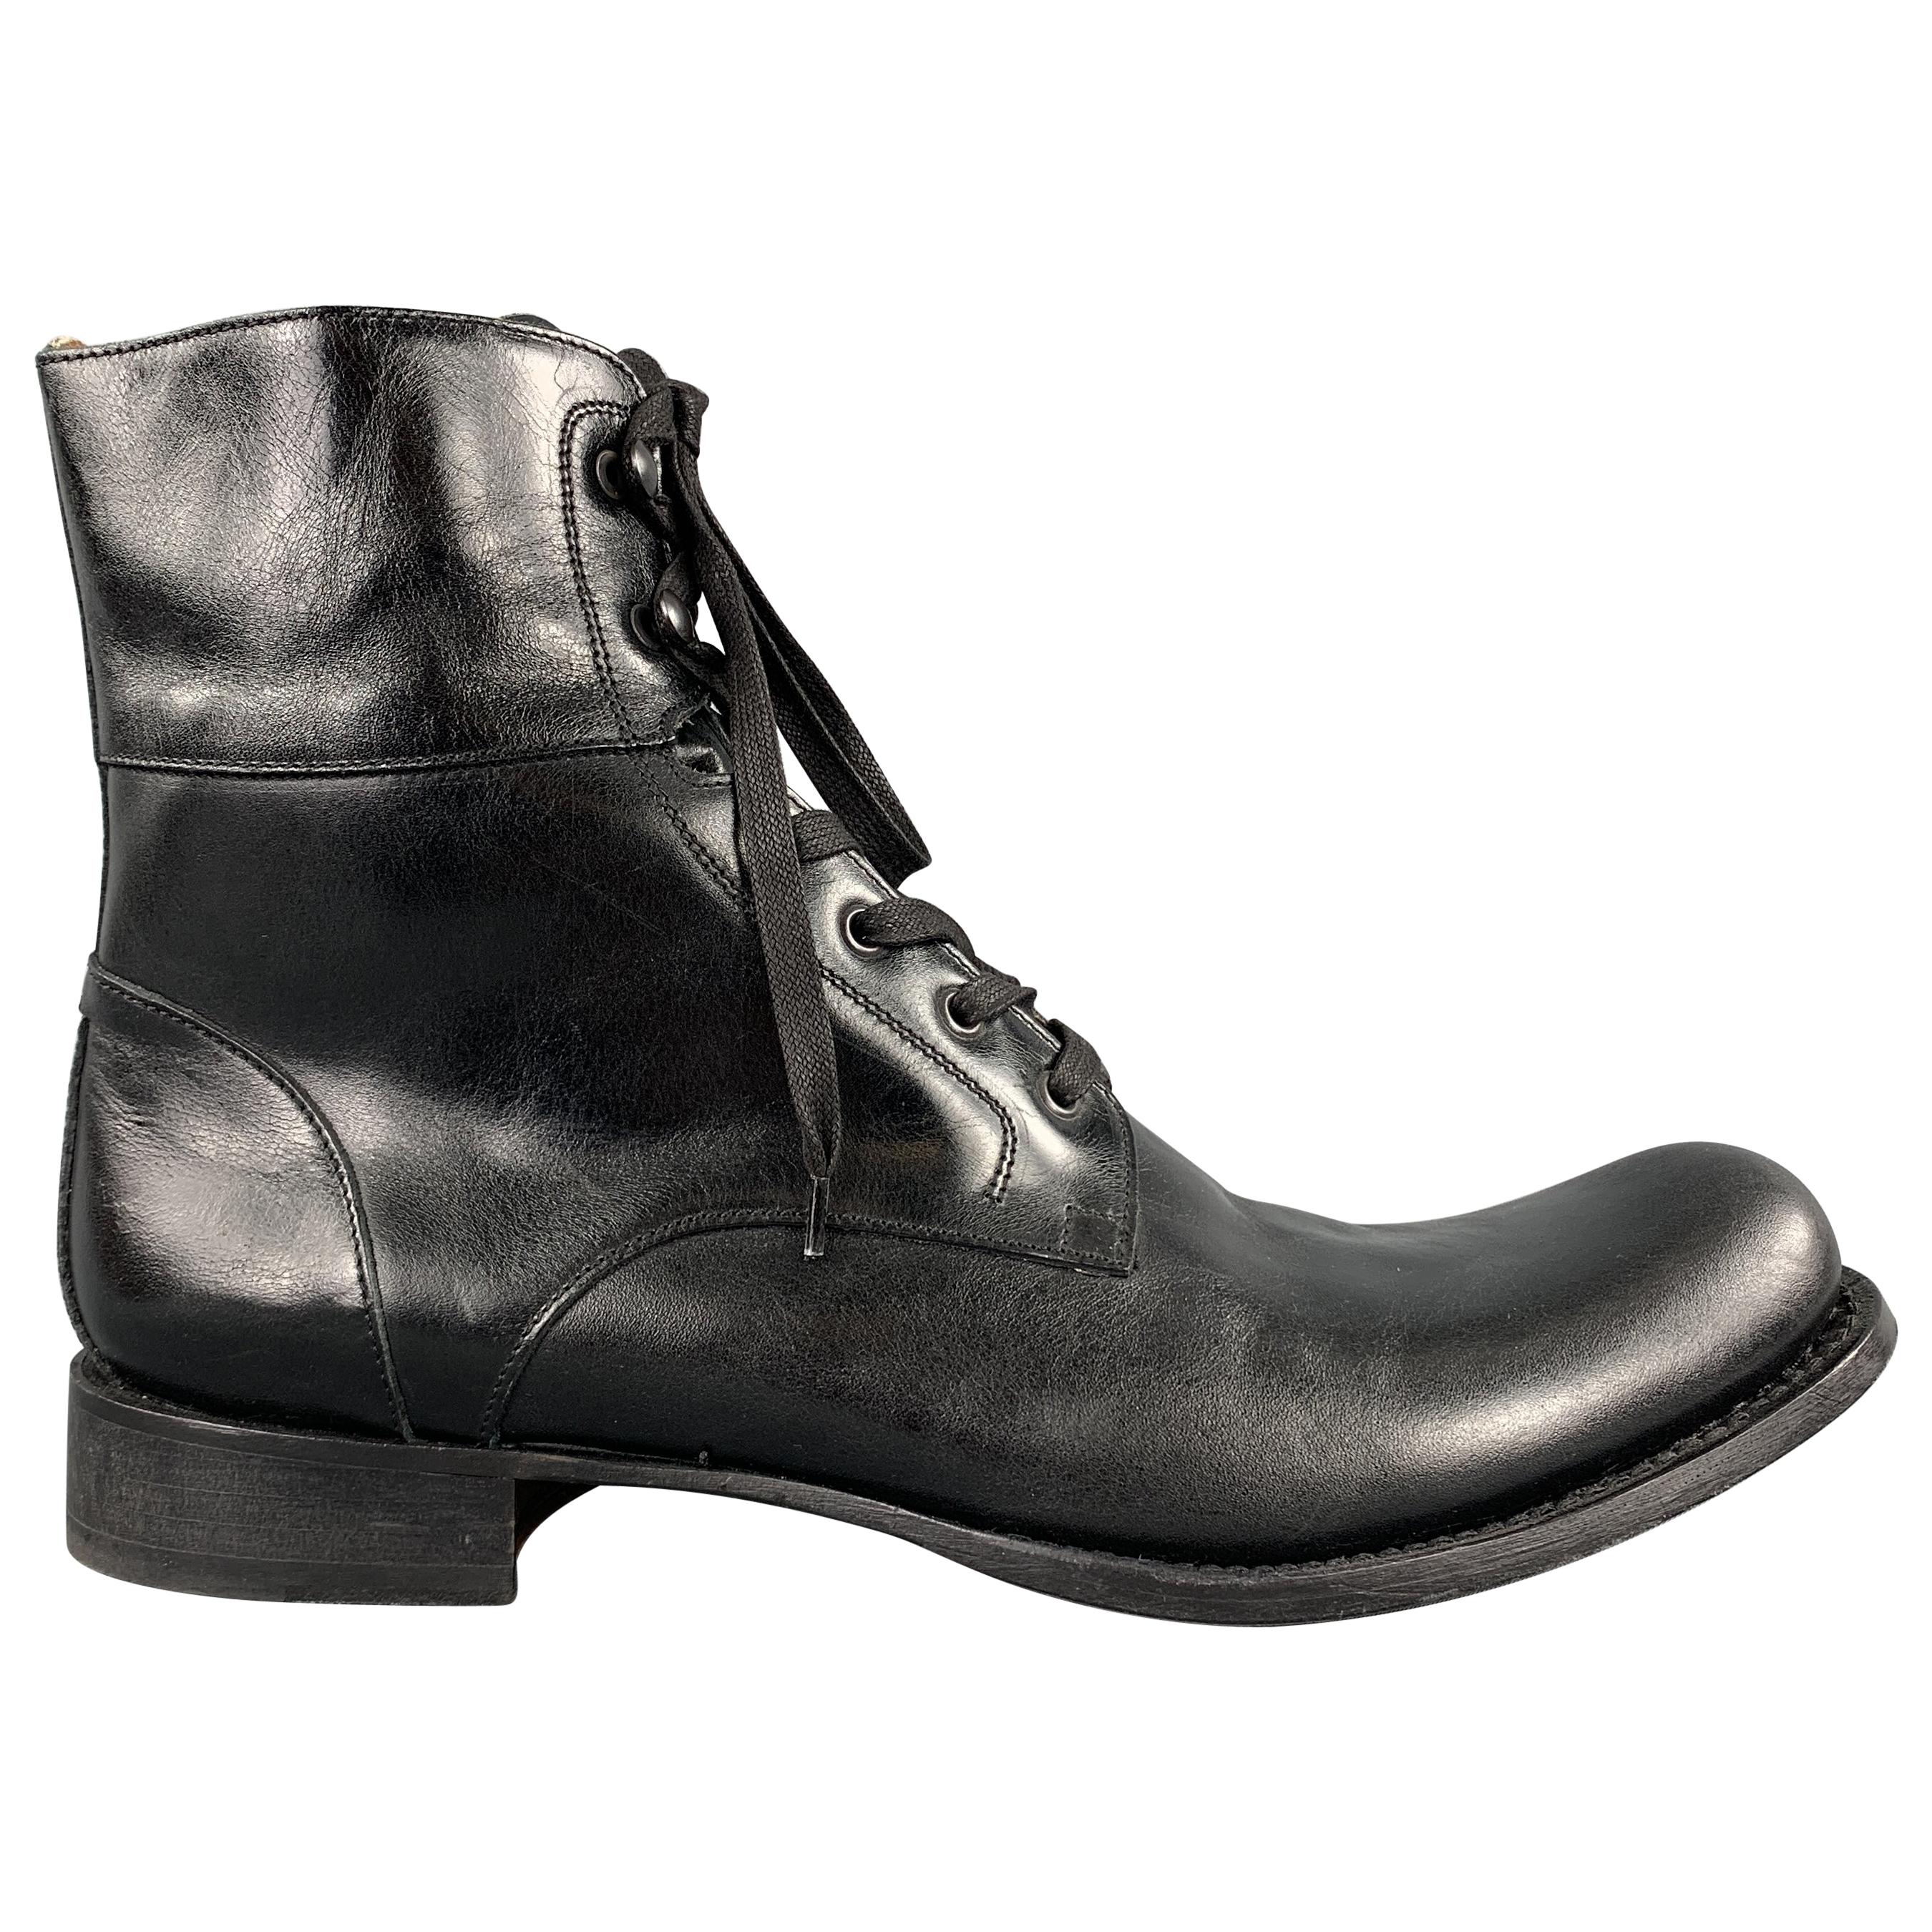 JOHN VARVATOS Size 12 Black Leather Lace Up Convert Boots